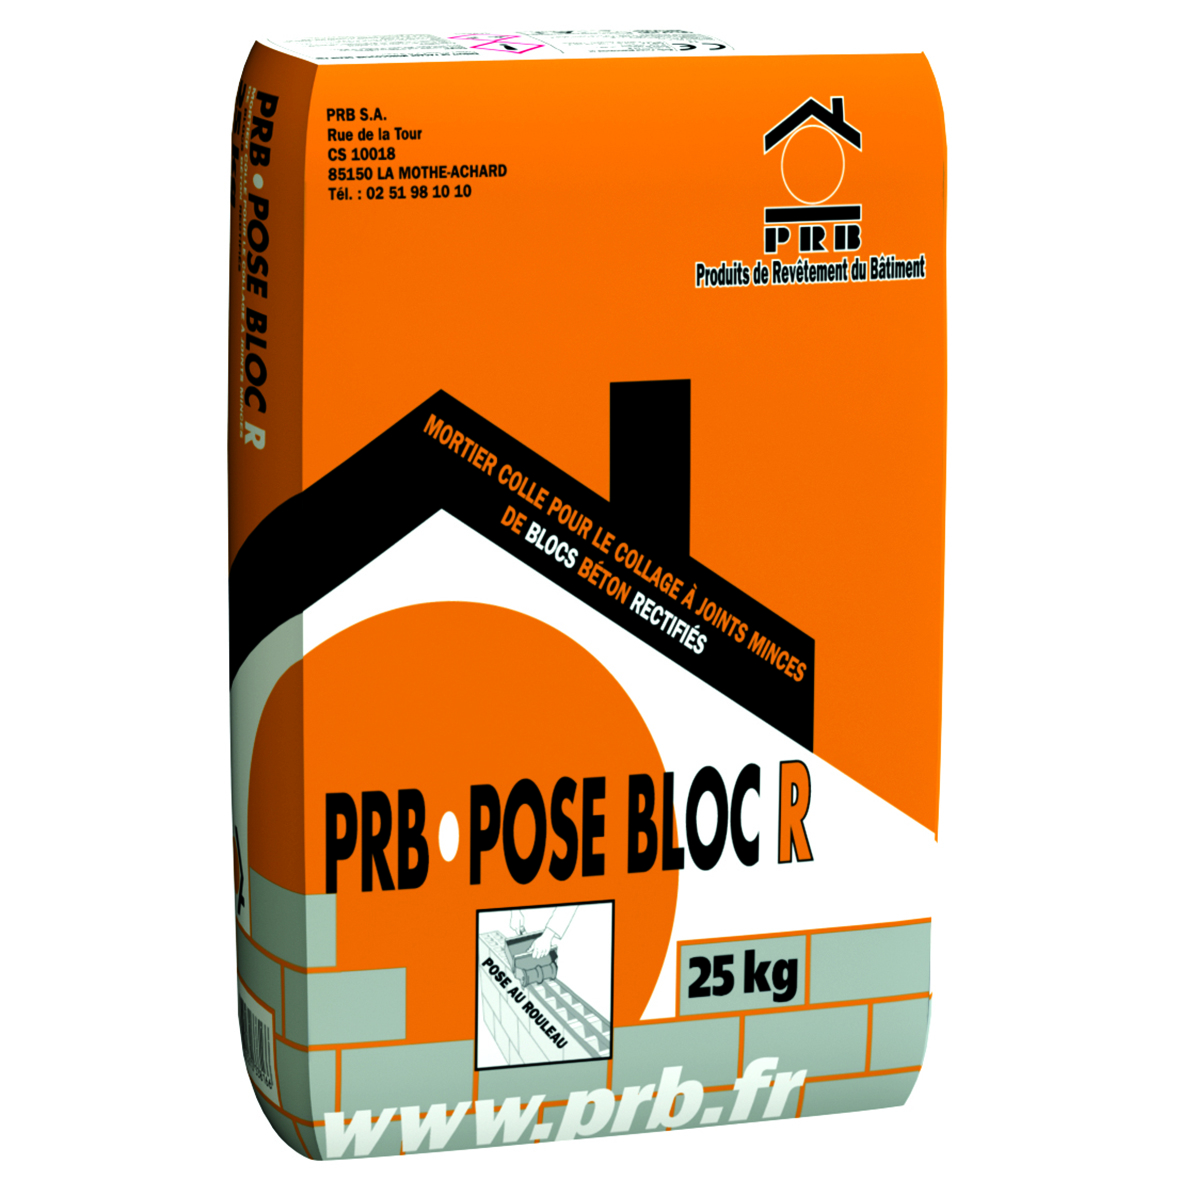 prb-pose-bloc-r-25-kg-0